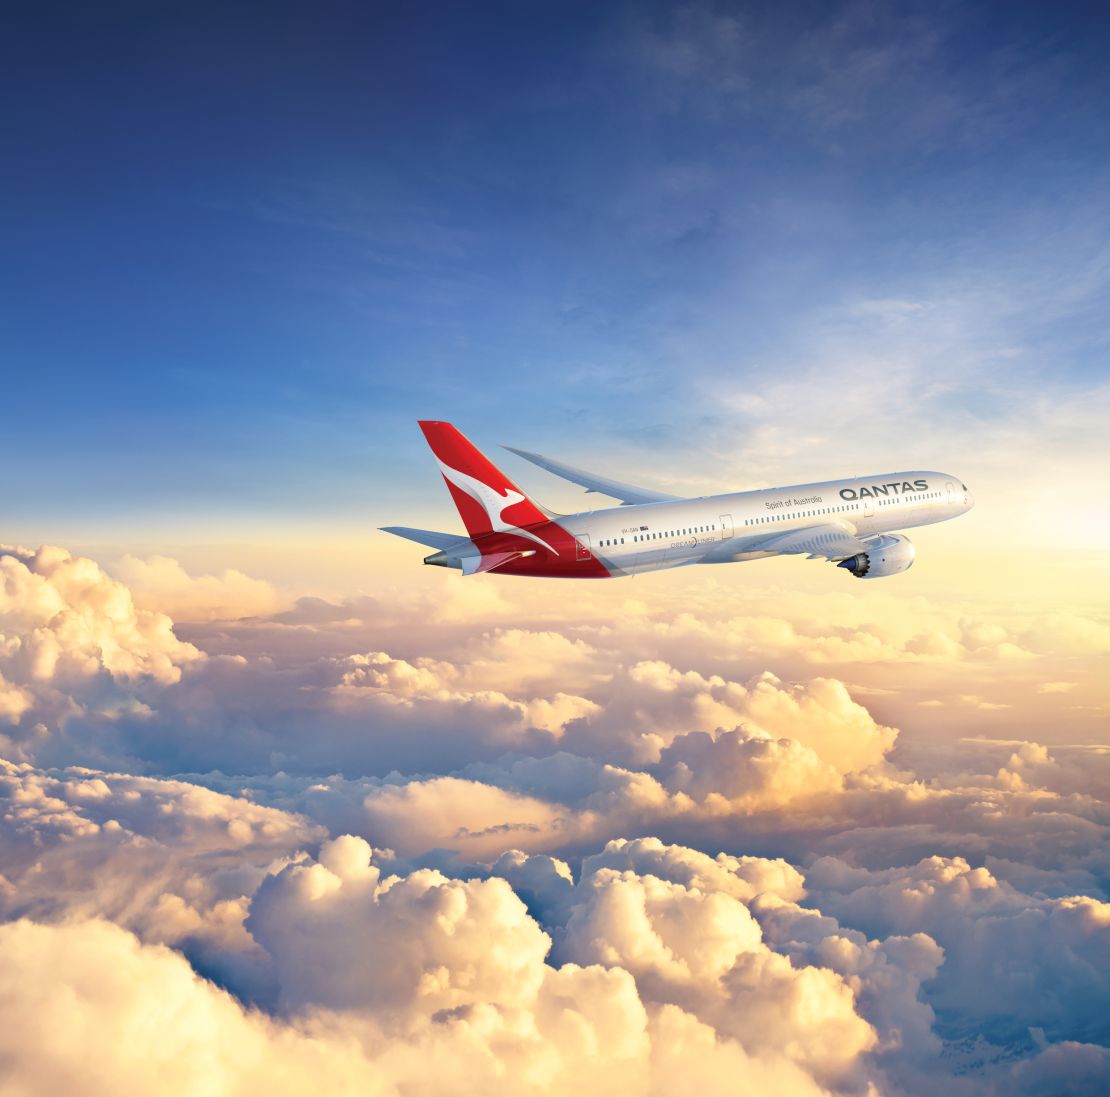 The Qantas logo is known as "The Flying Kangaroo."